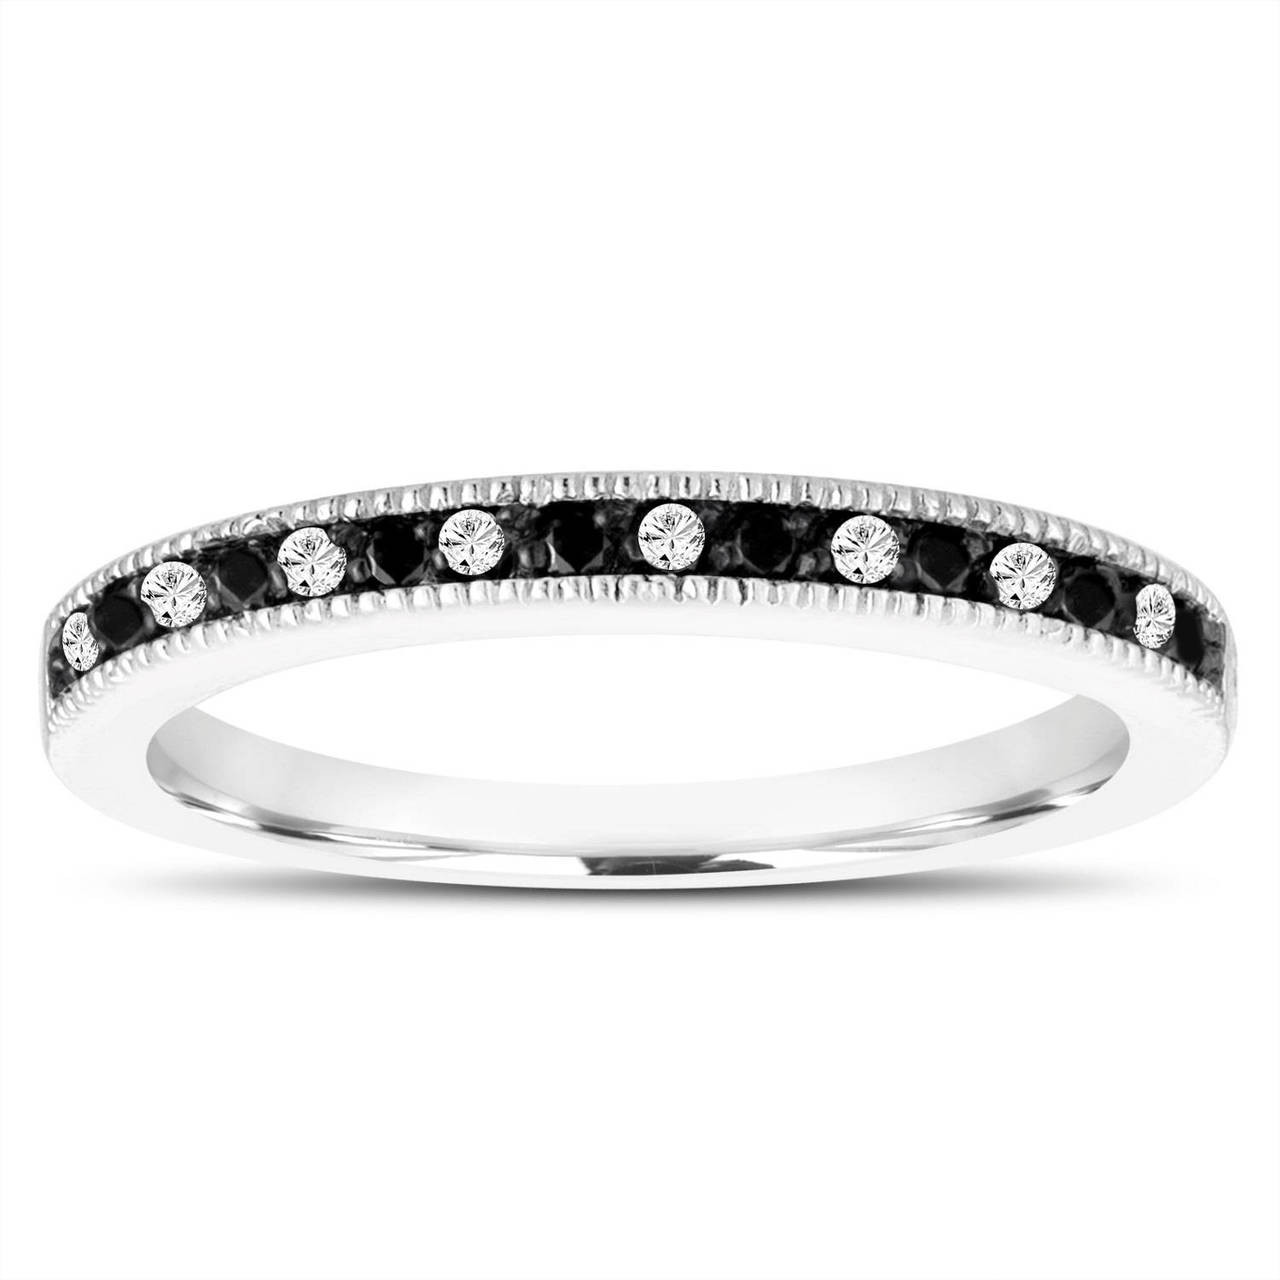 Black And White Diamonds Alternating Wedding Band Anniversary Ring Fancy Wedding Ring Stackable 14K White Gold Handmade Pave 0.15 Carat   87966.1508863670.1280.1280 ?c=2